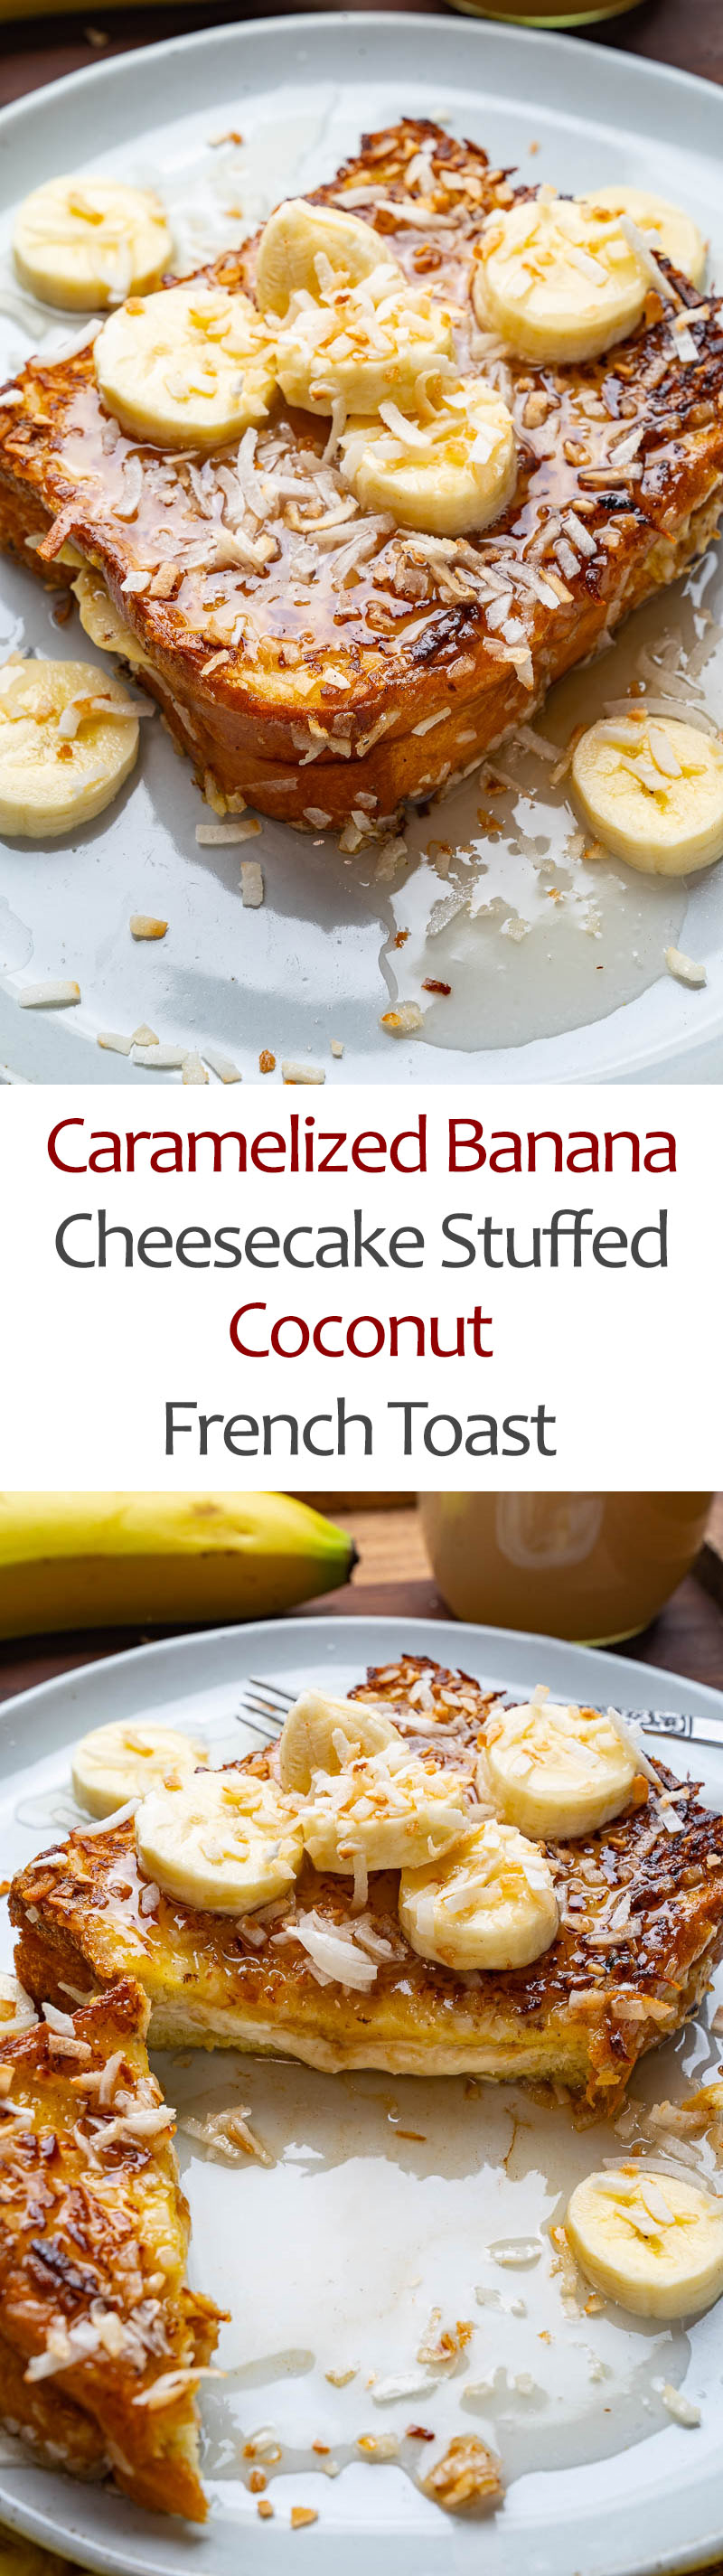 Caramelized Banana Cheesecake Stuffed Coconut French Toast